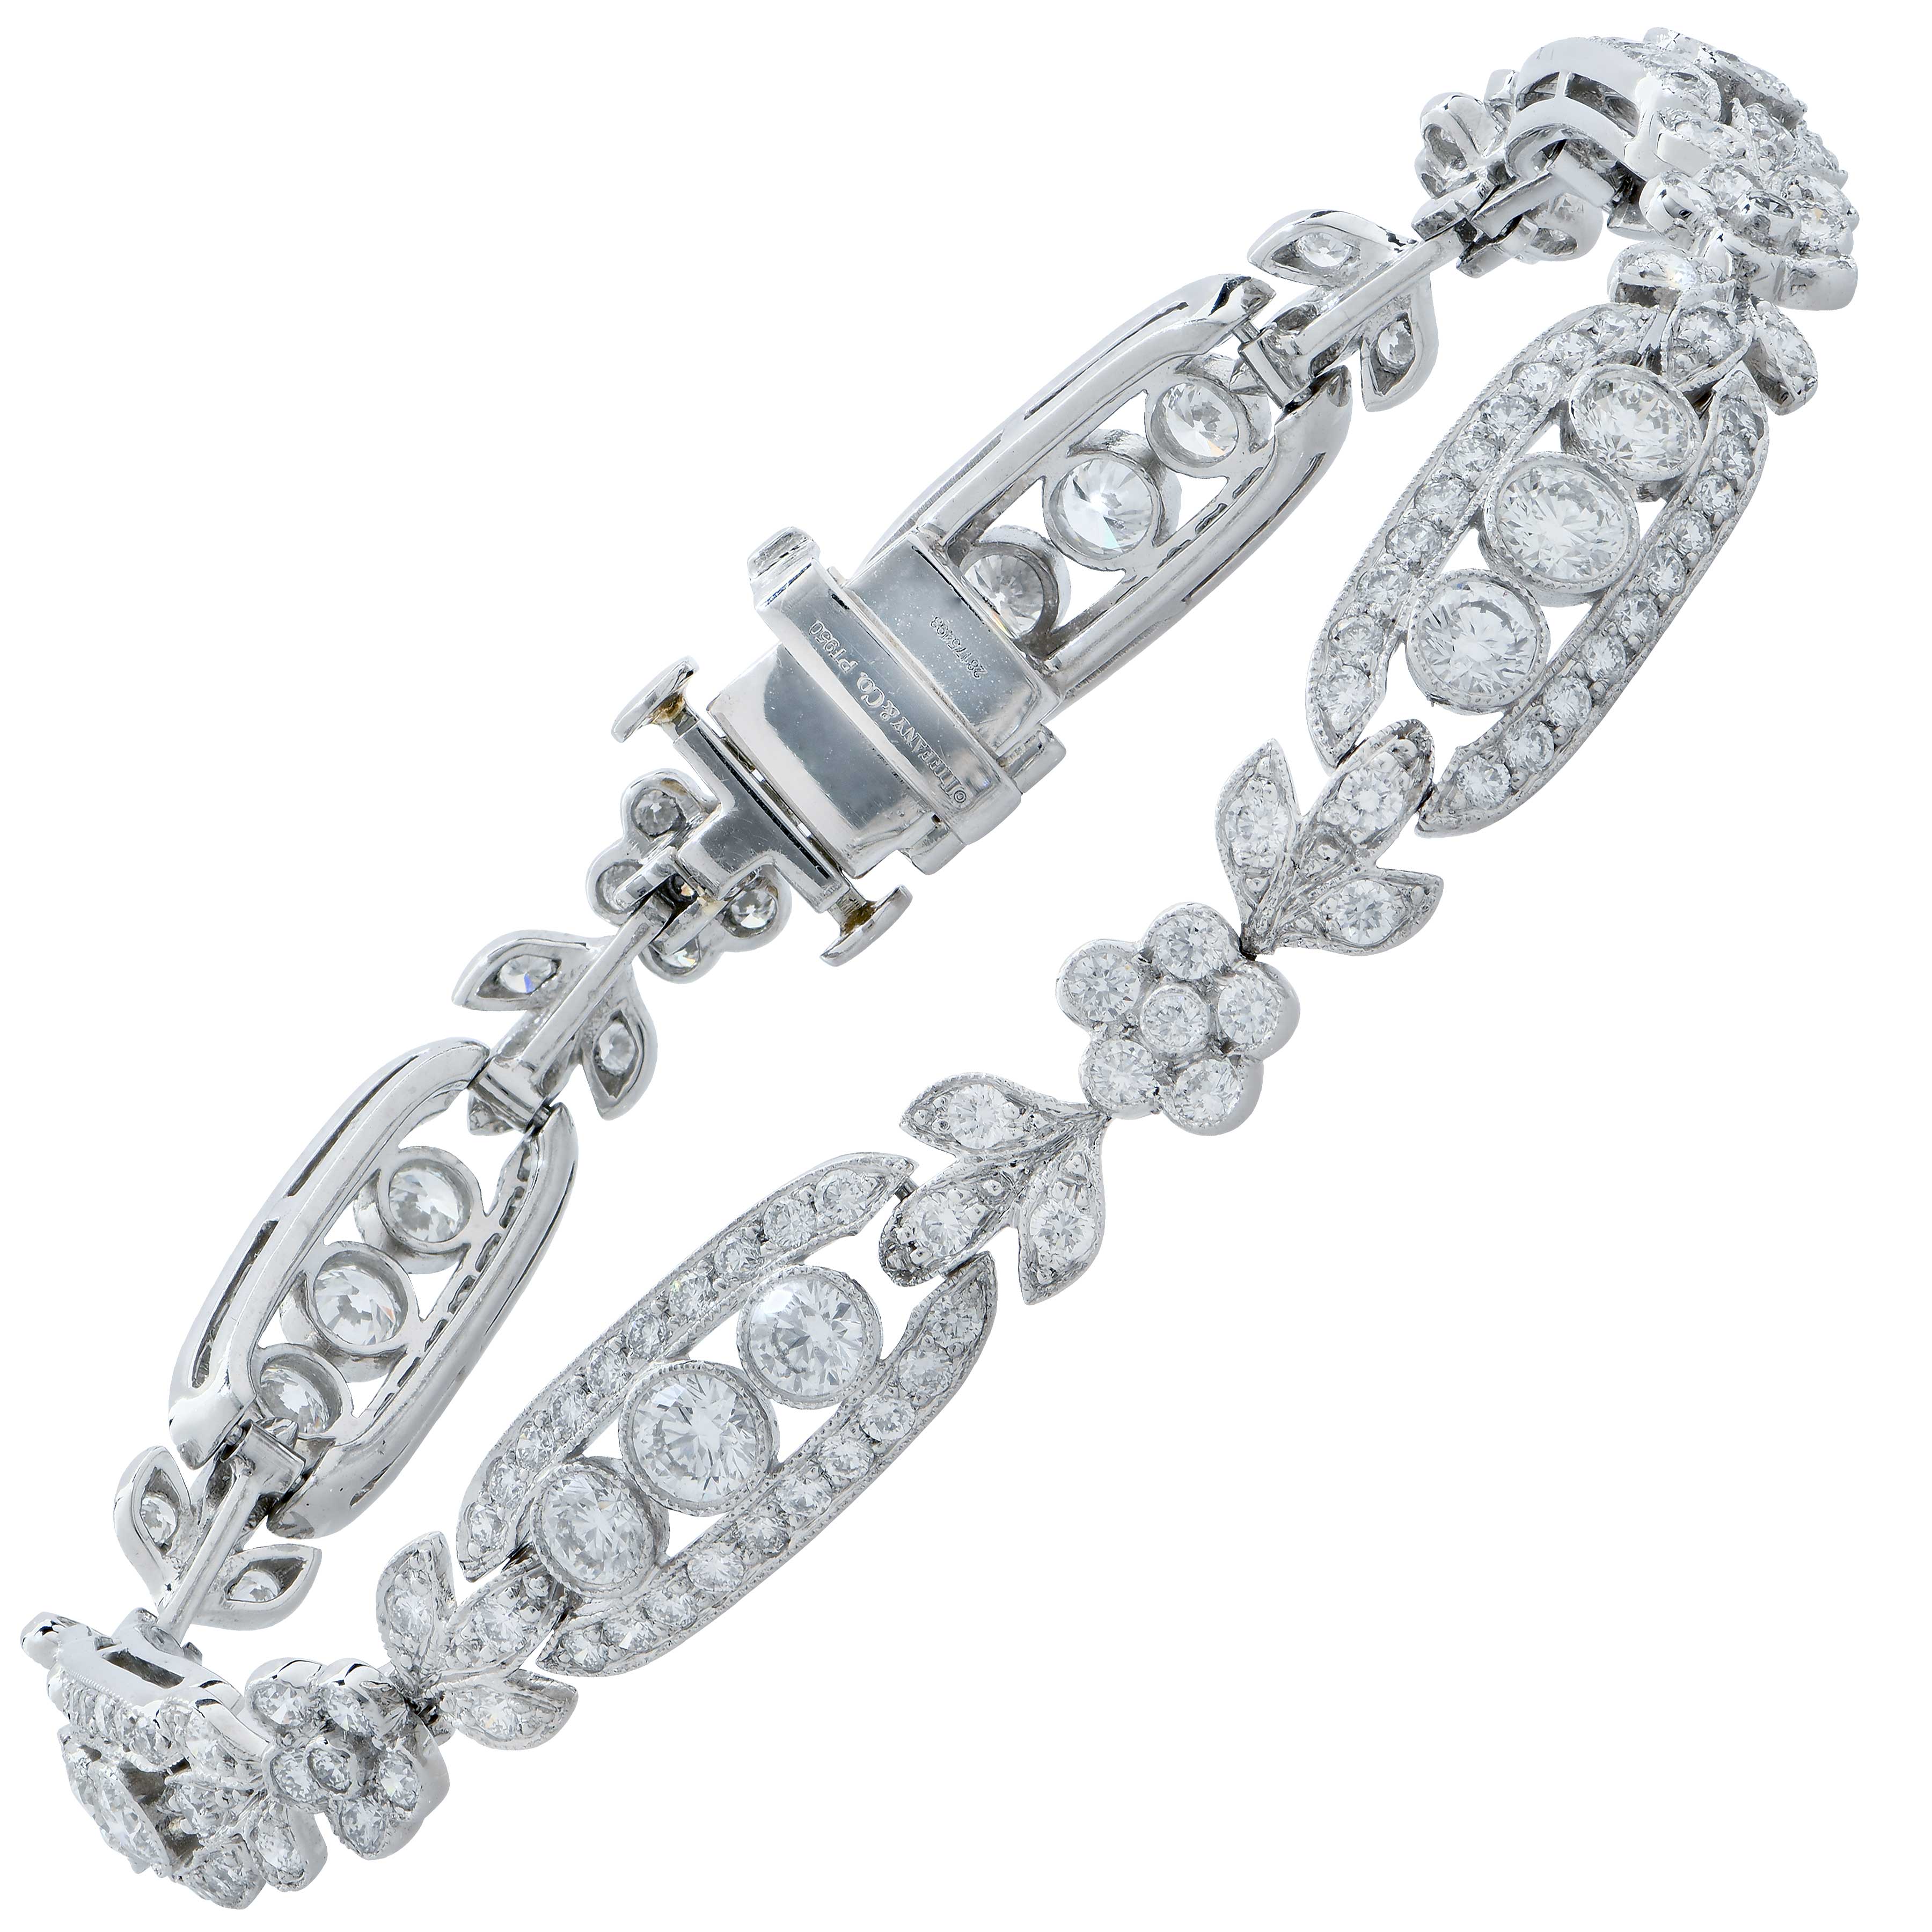 Tiffany  Co Art Deco Diamond and Sapphire Bracelet in Platinum  Old Cut  Grain Set  Pragnell